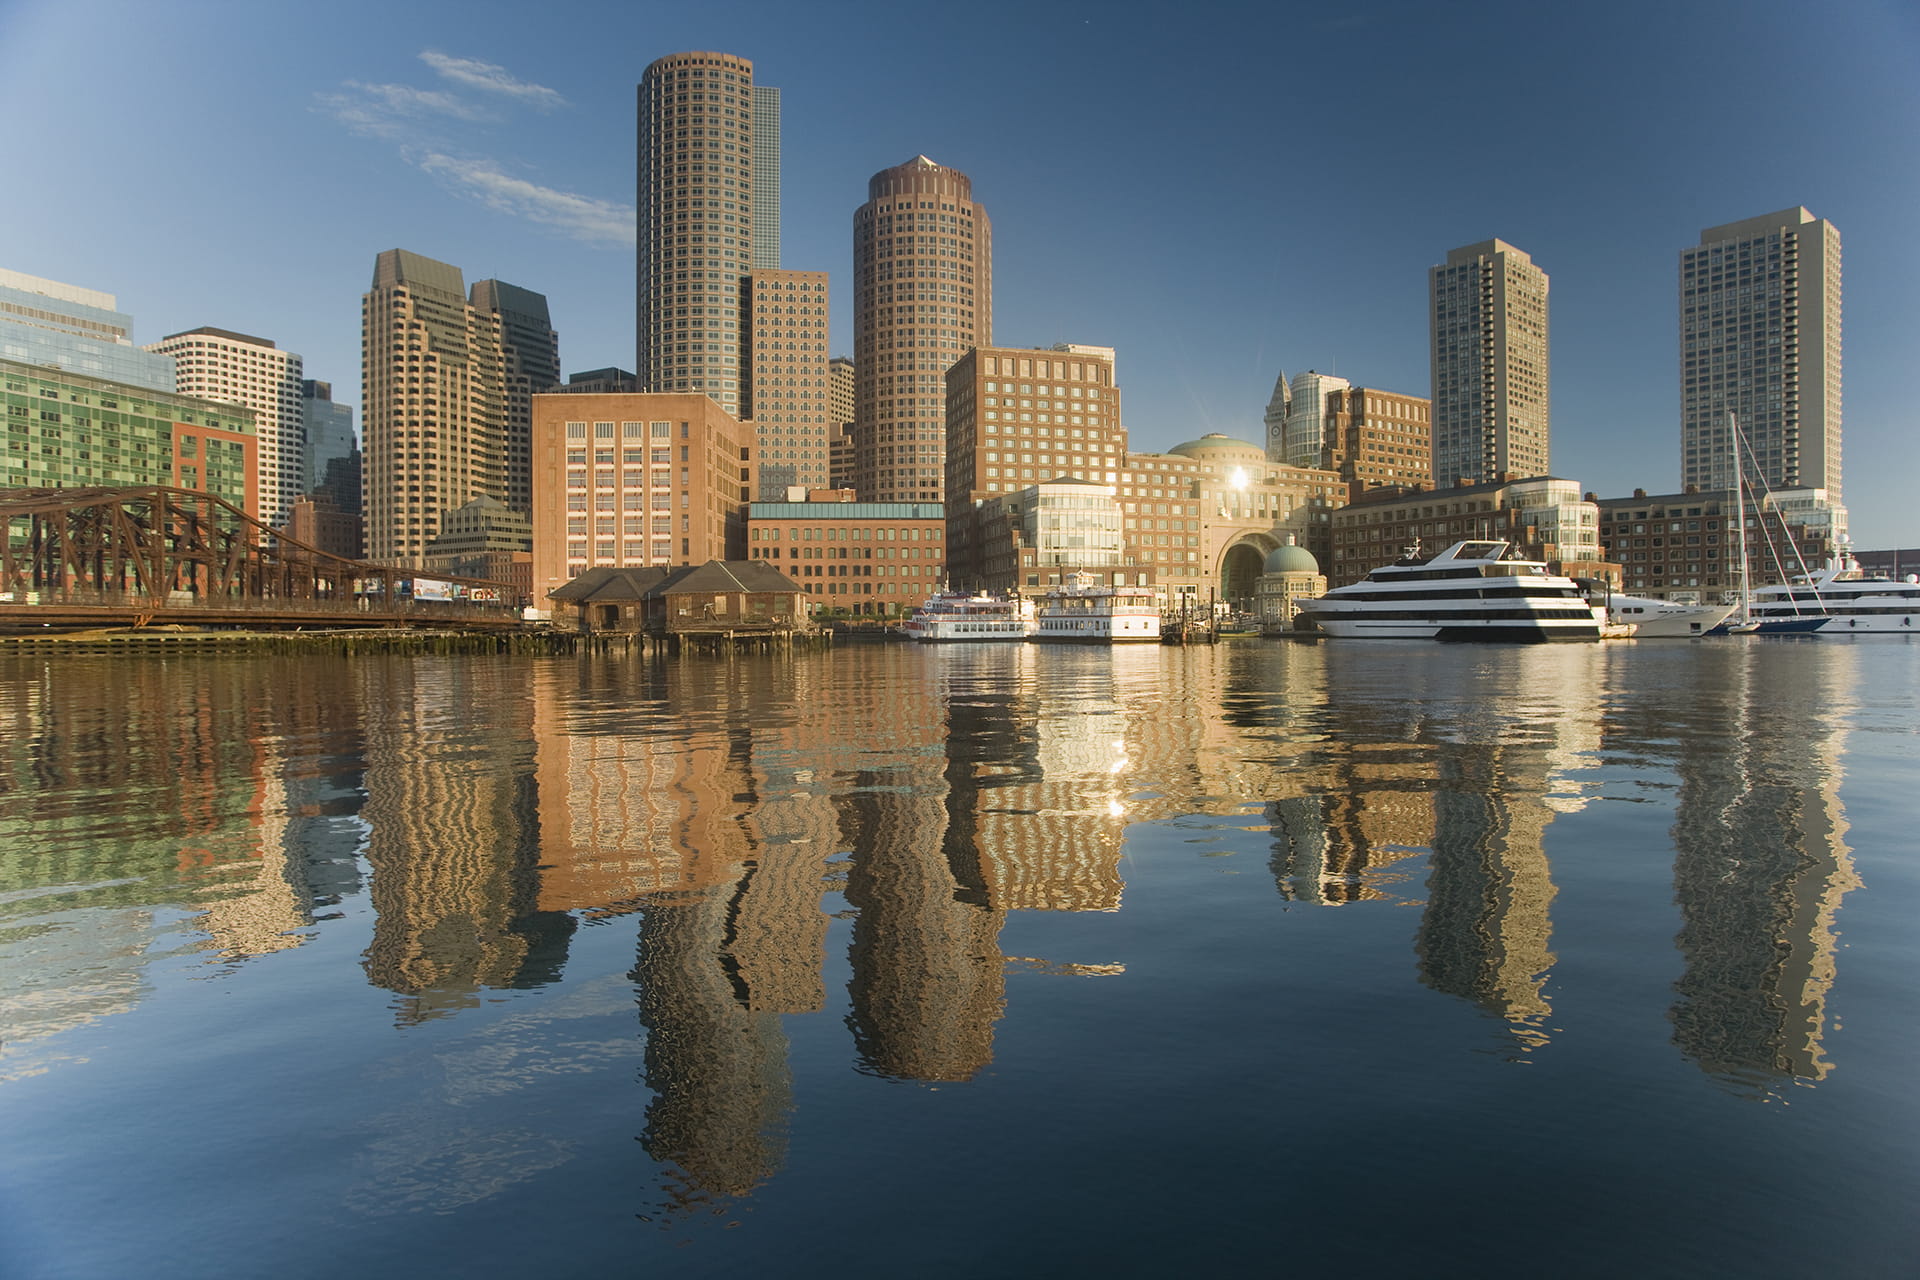 Bird's eye view of Boston